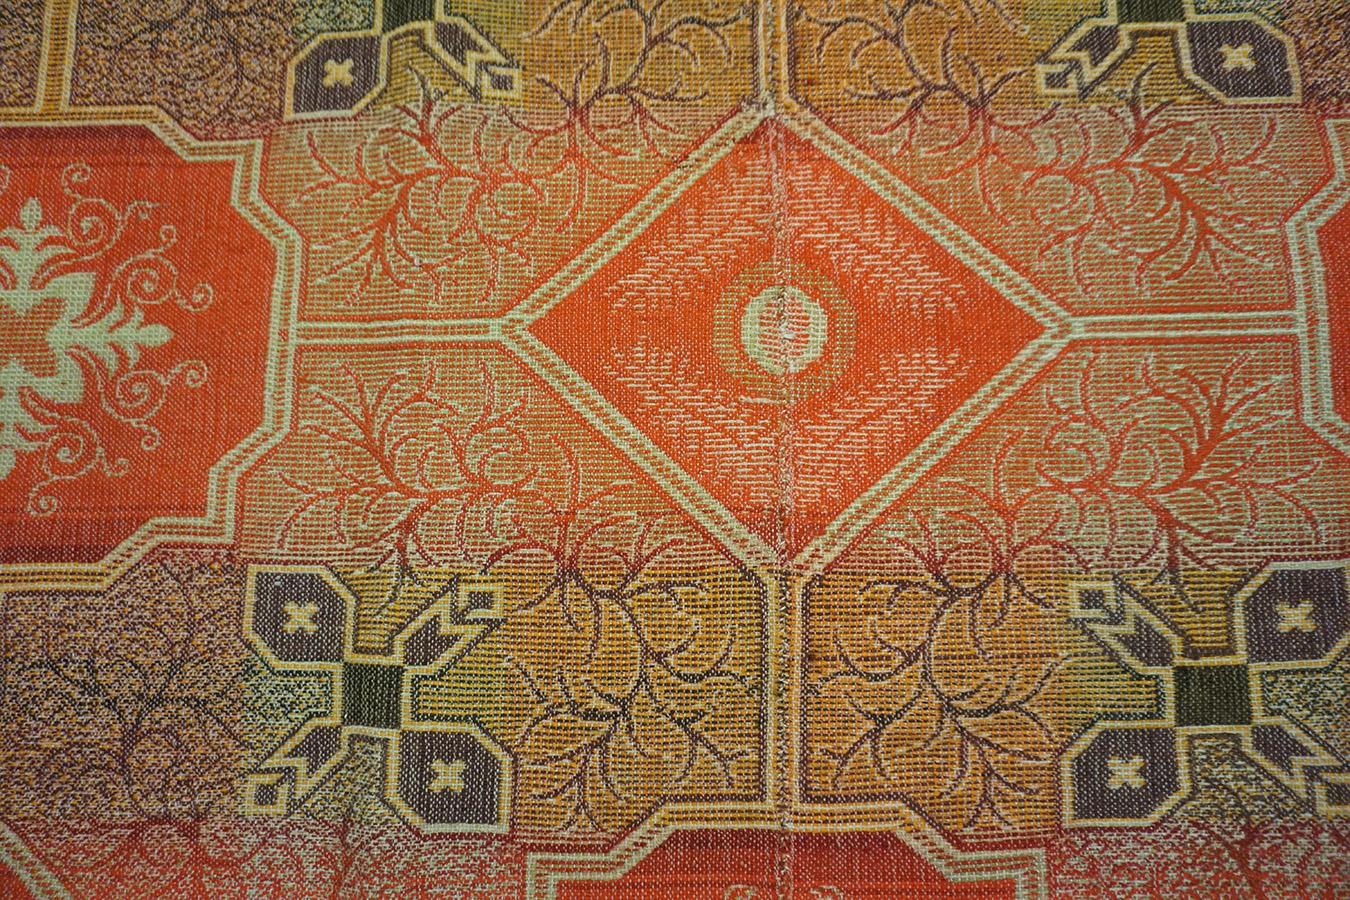 Late 19th Century 19th Century American Ingrain Carpet ( 7'7